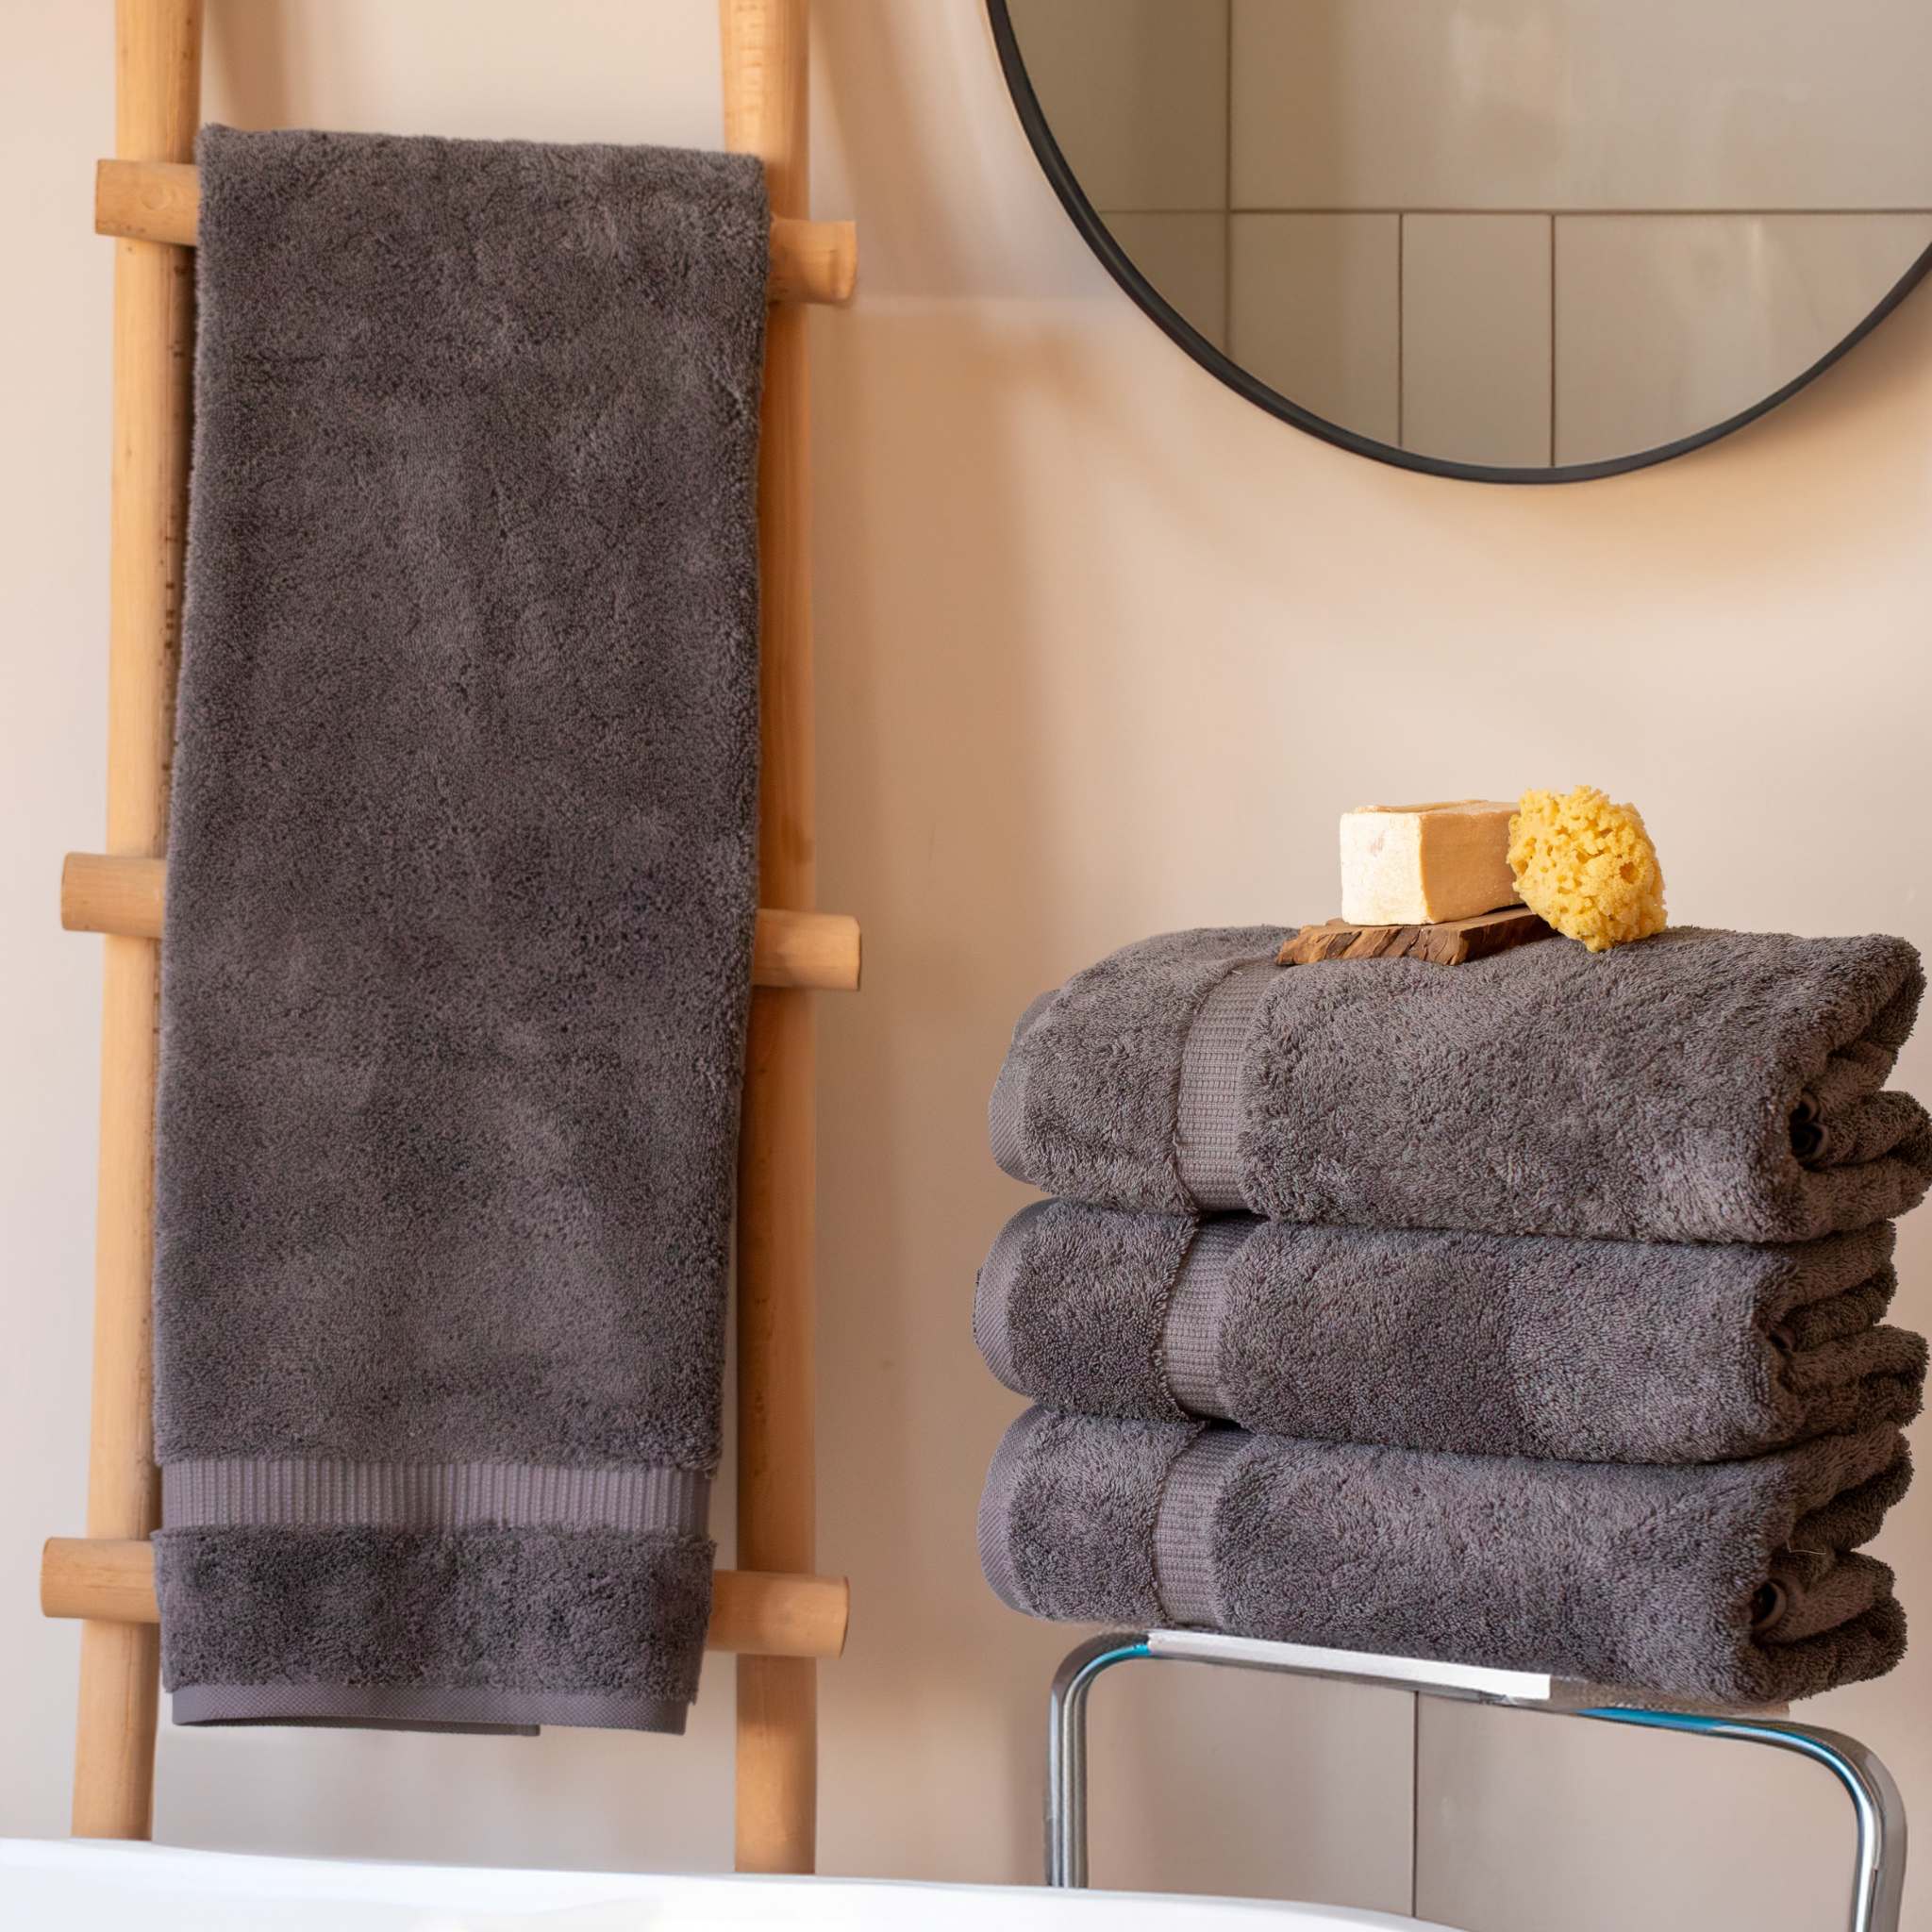 Salbakos Cambridge Bath Towel (4-Pack)